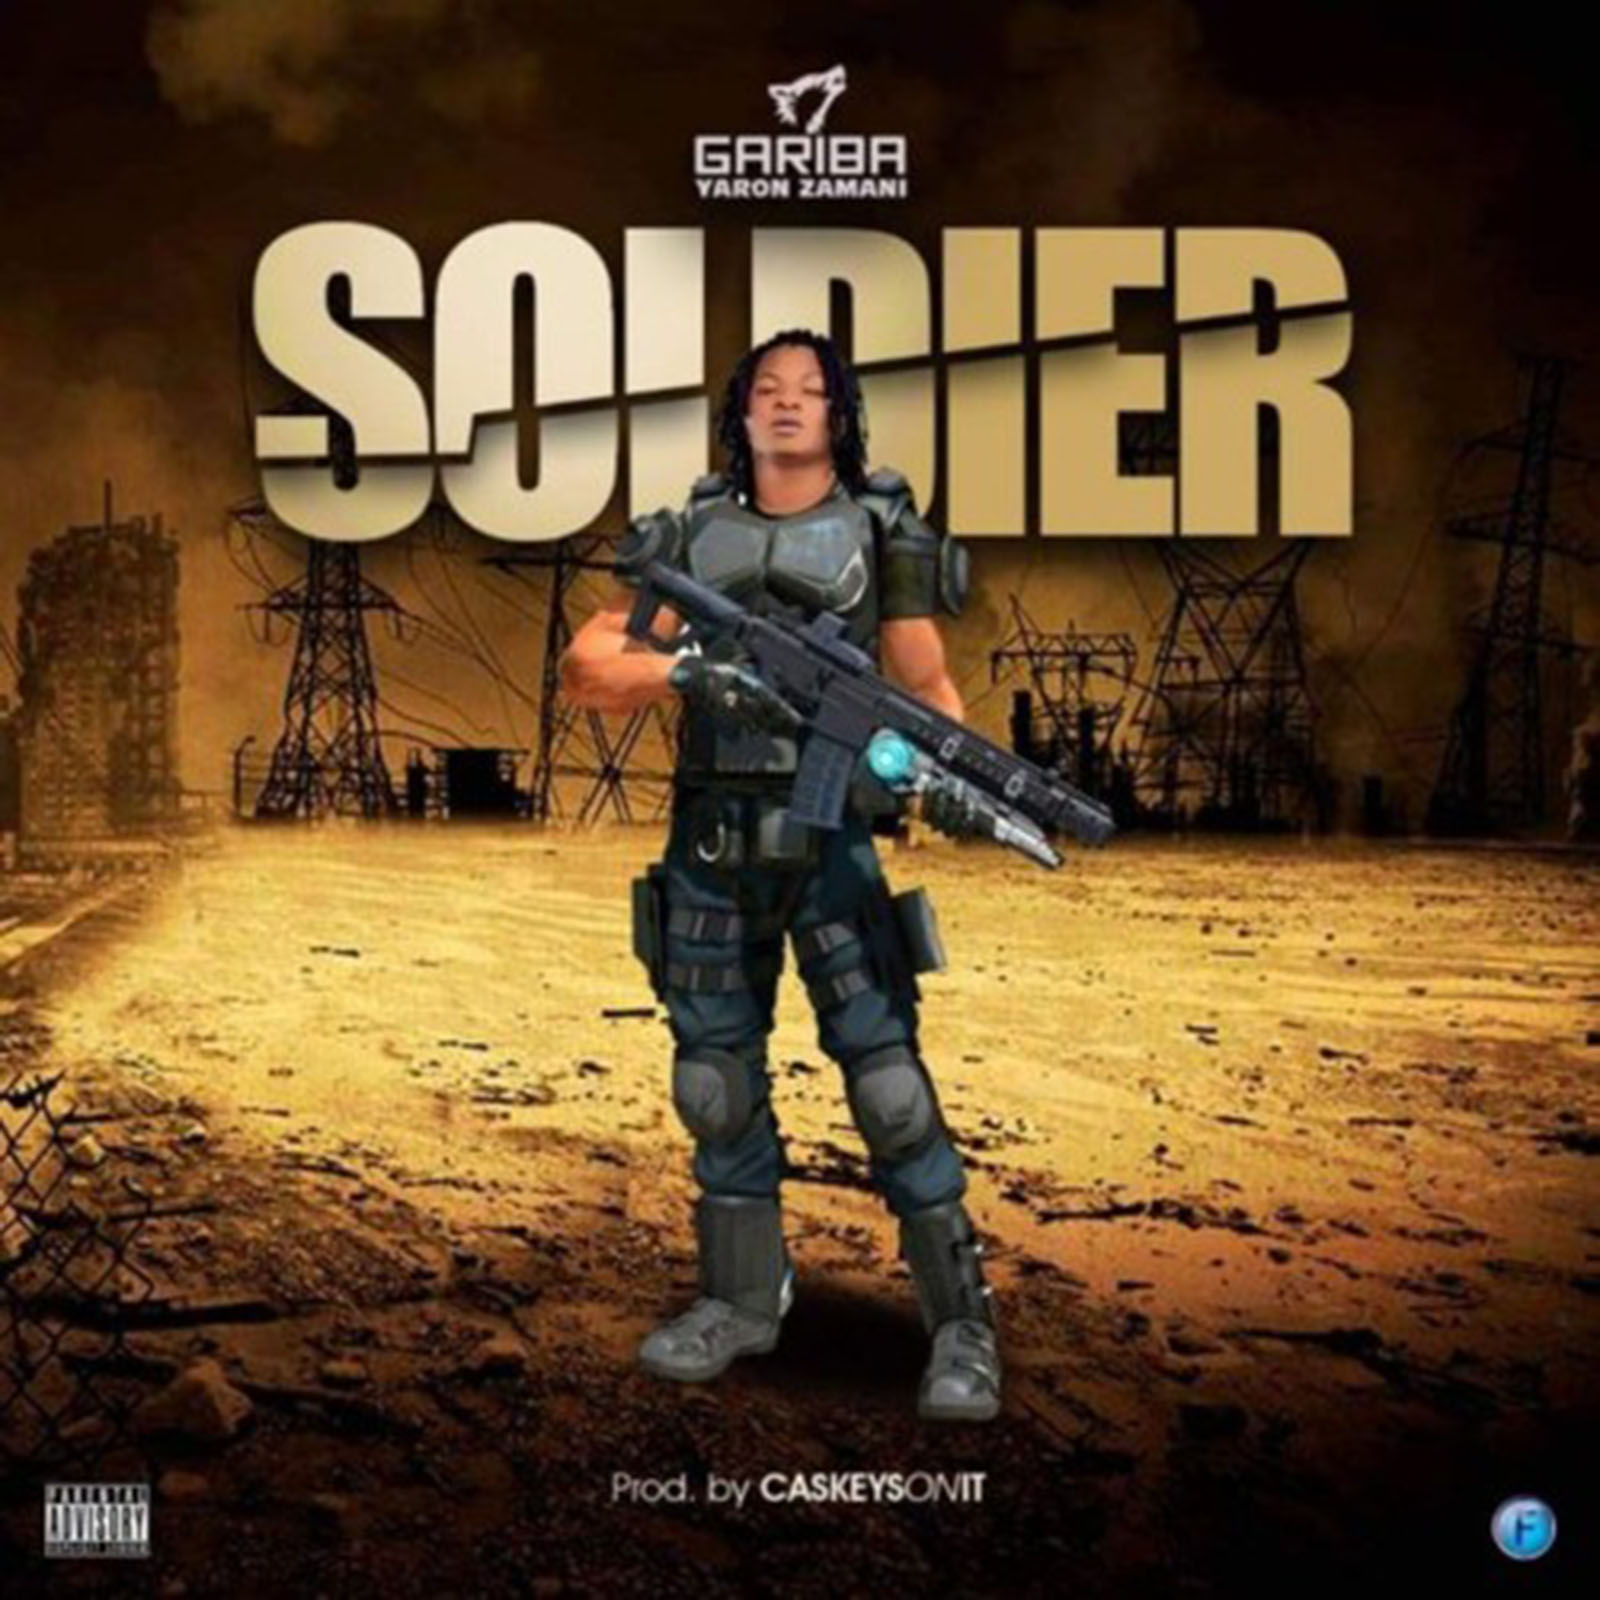 Soldier by Gariba